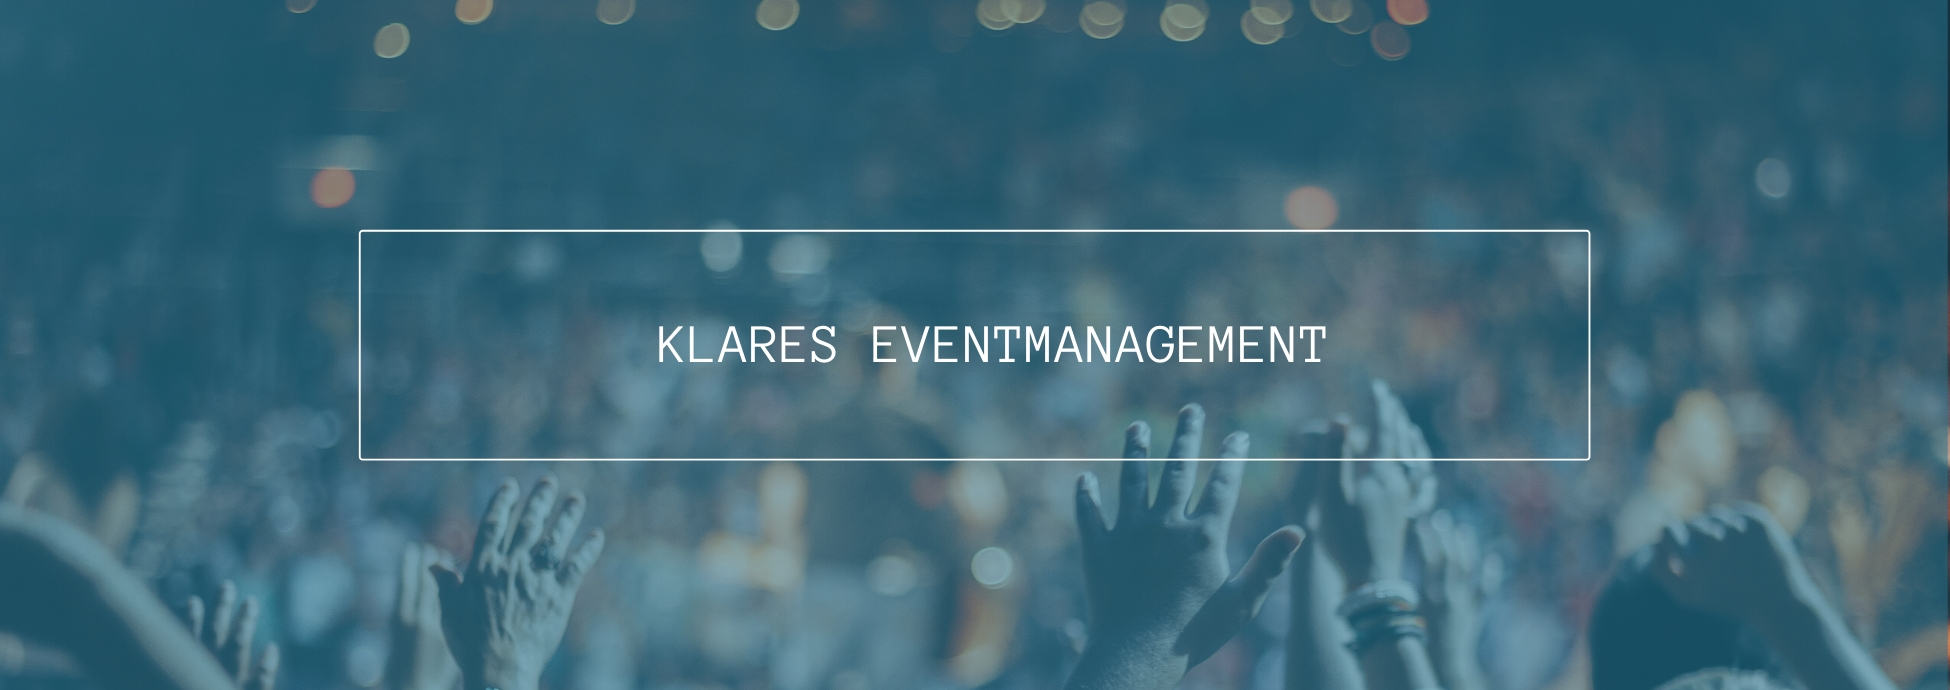 header eventmanagement